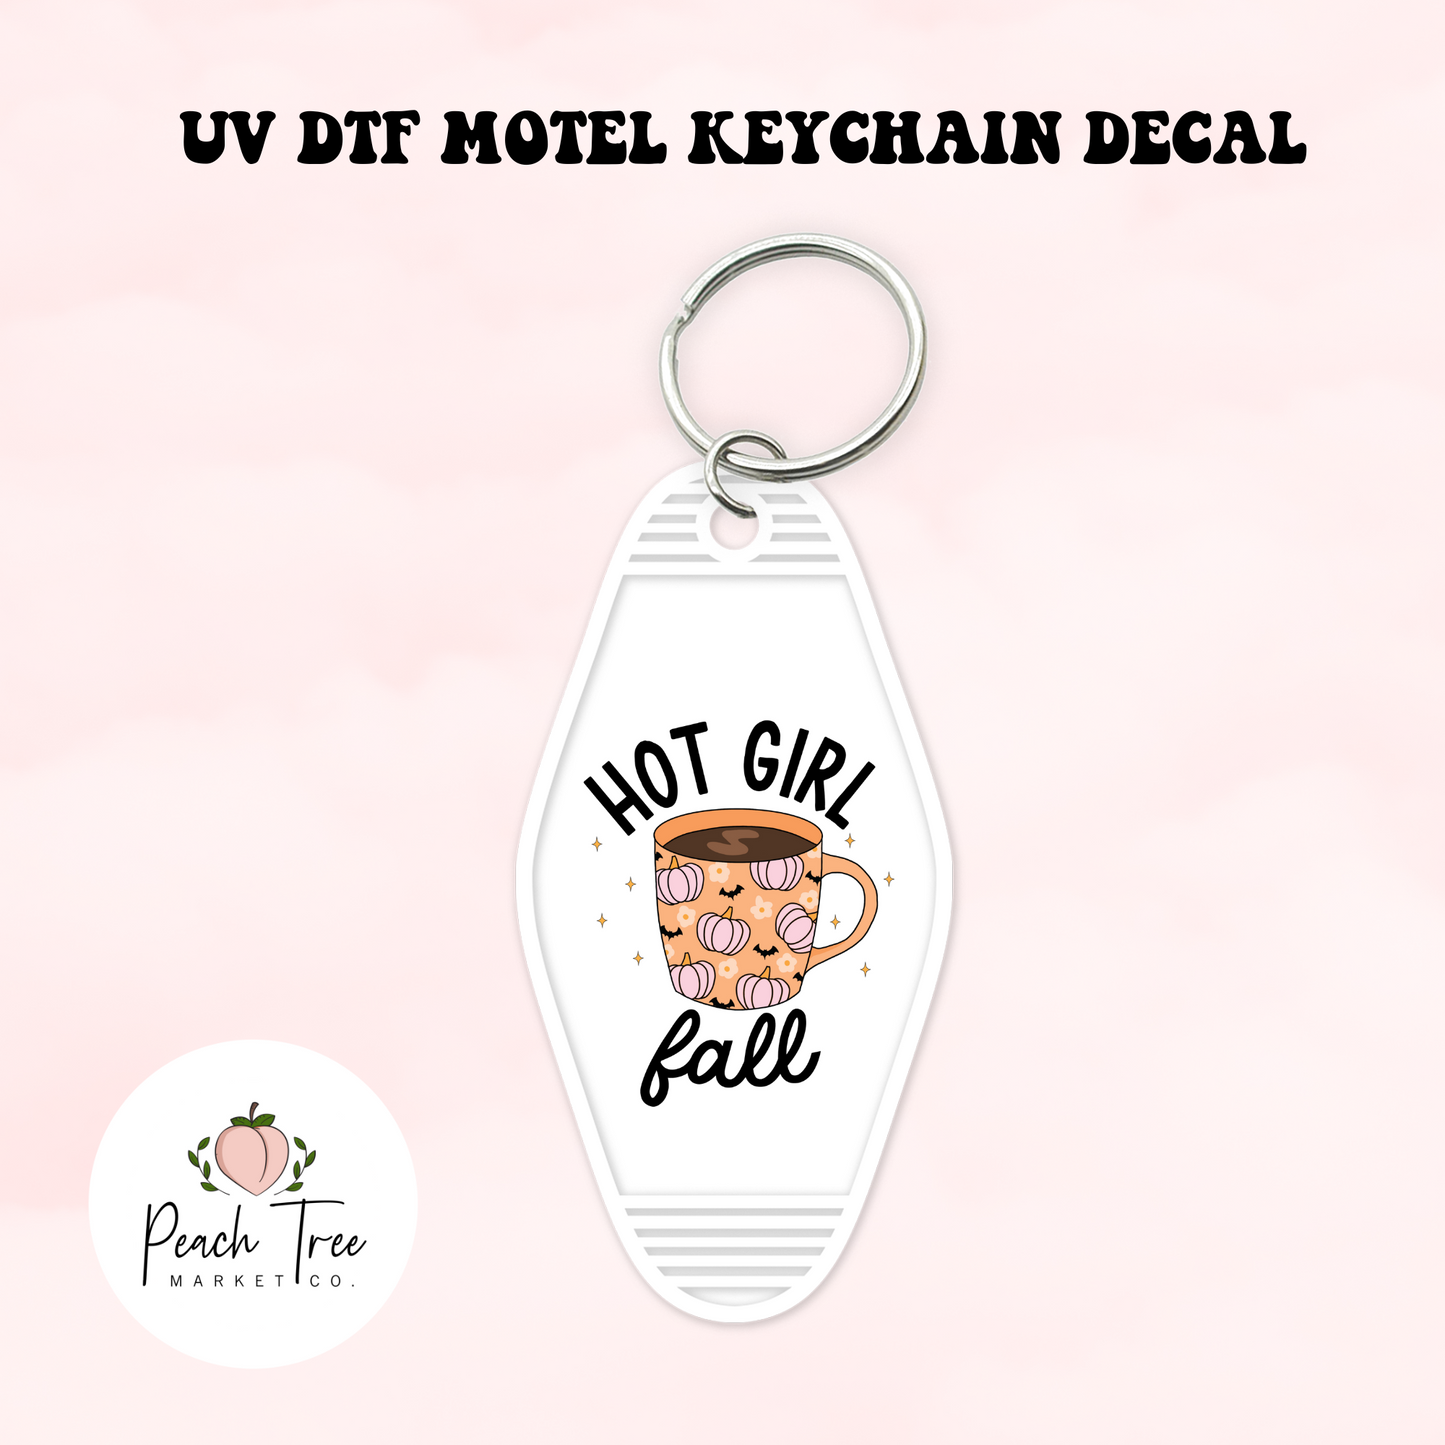 Hot Girl Fall UV DTF Motel Keychain Decal